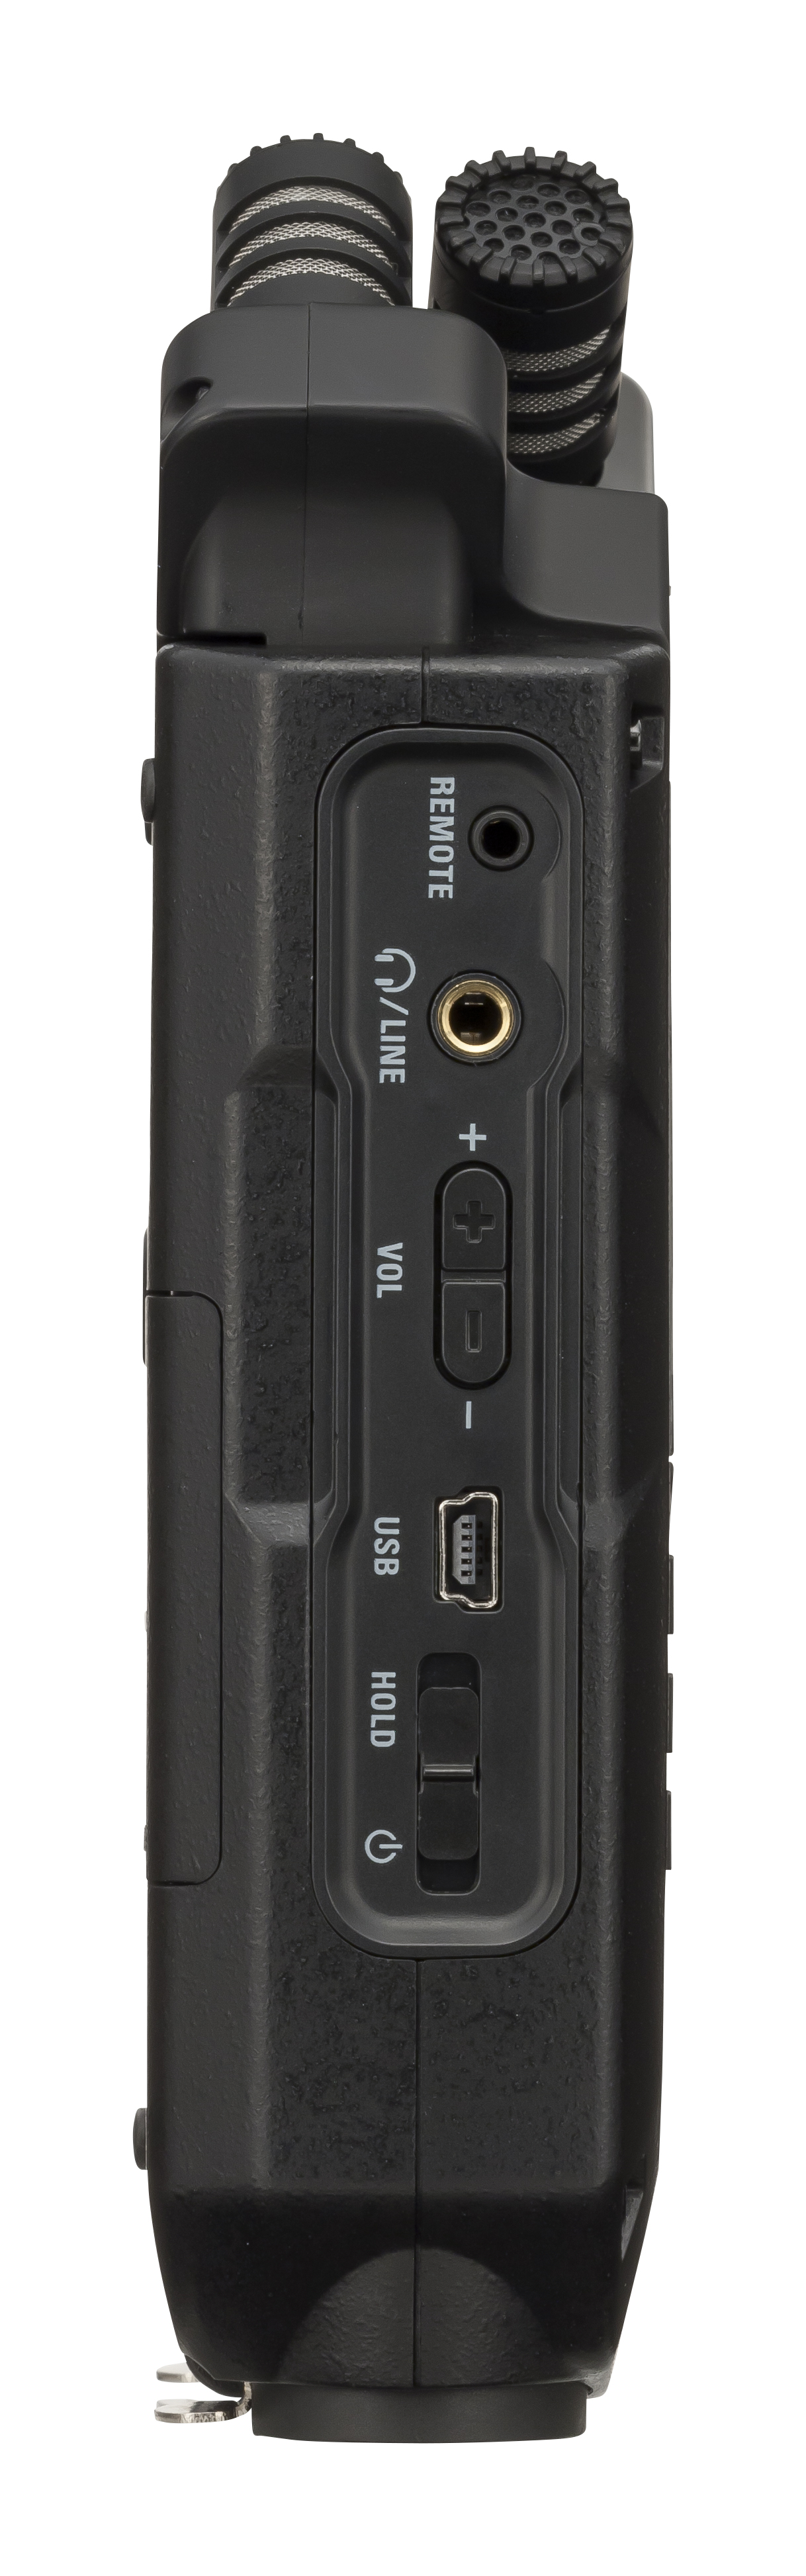 Zoom H4n Pro Black + Pack Accessoires - Enregistreur Portable - Variation 2